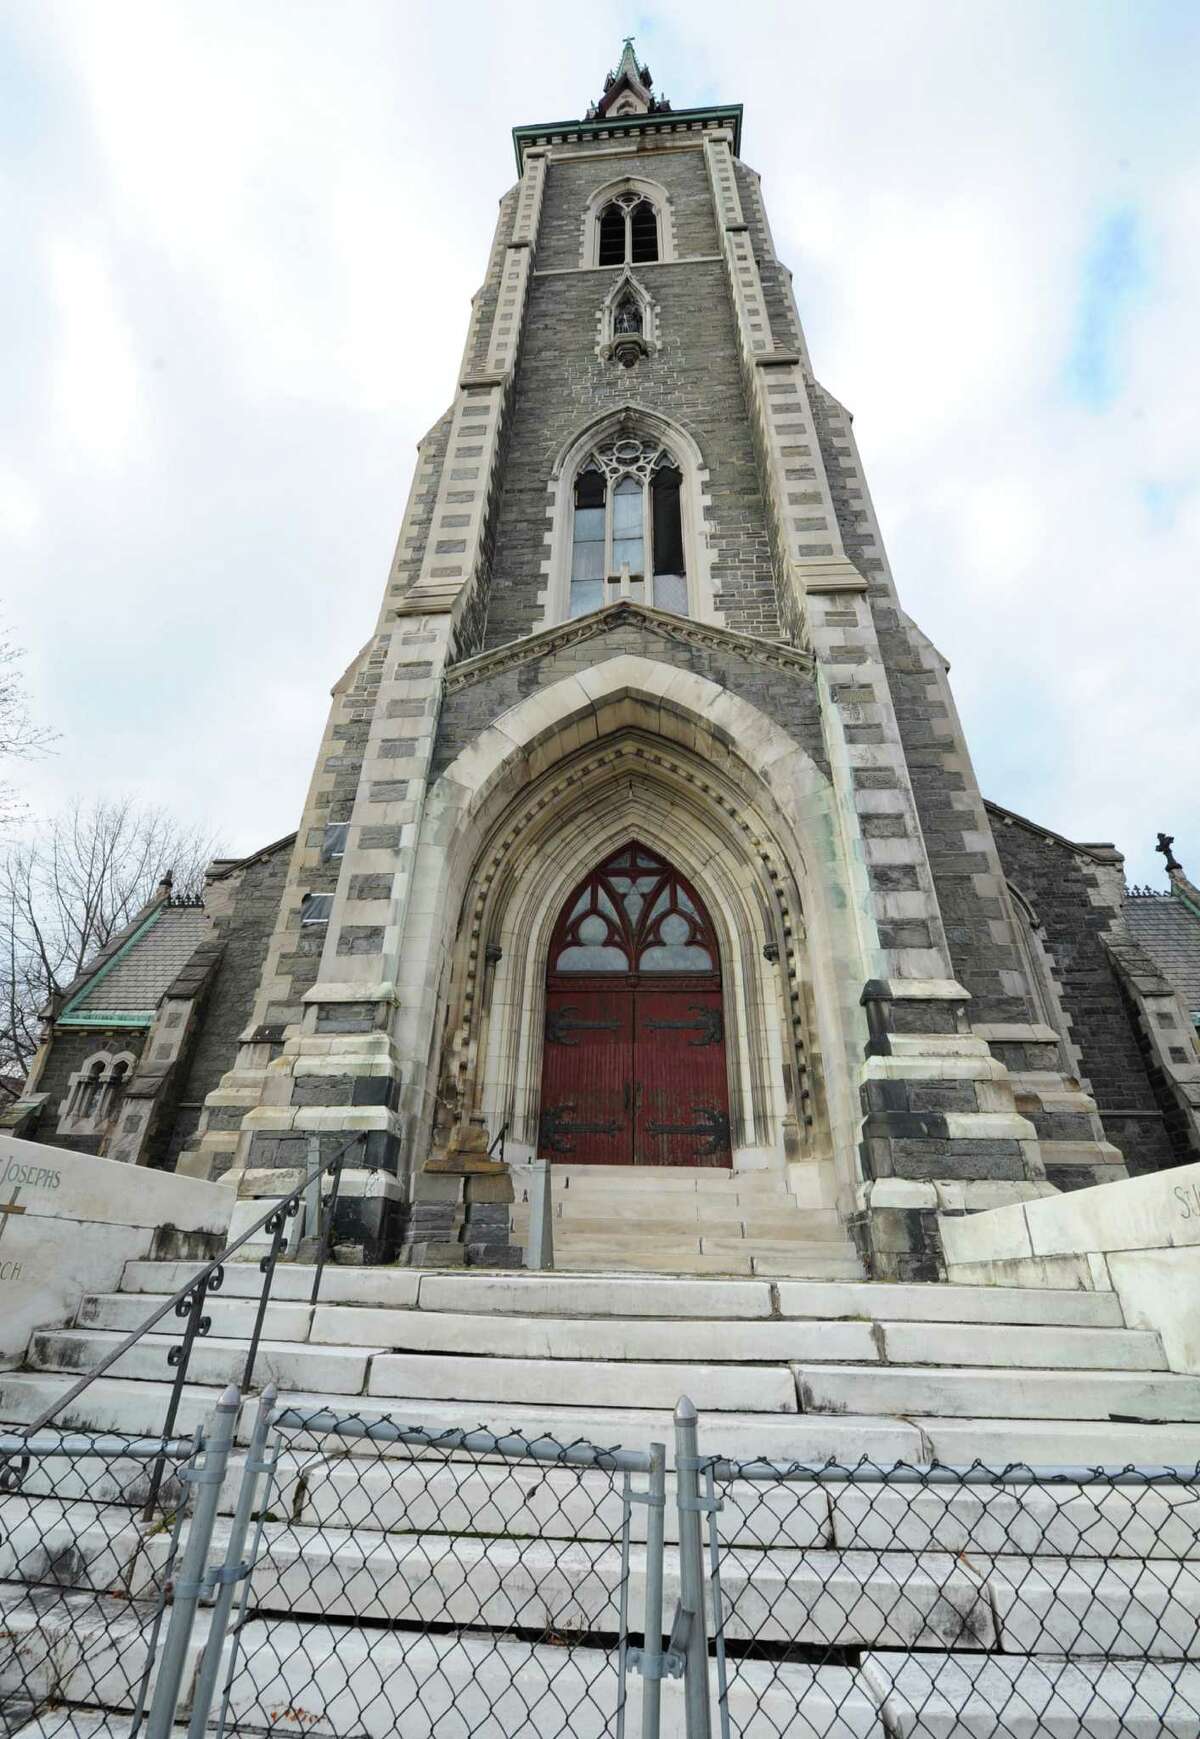 Exterior of St. Joseph's Church on Ten Broeck St. Wednesday Dec. 12, 2012 in Albany, N.Y. (Lori Van Buren / Times Union)